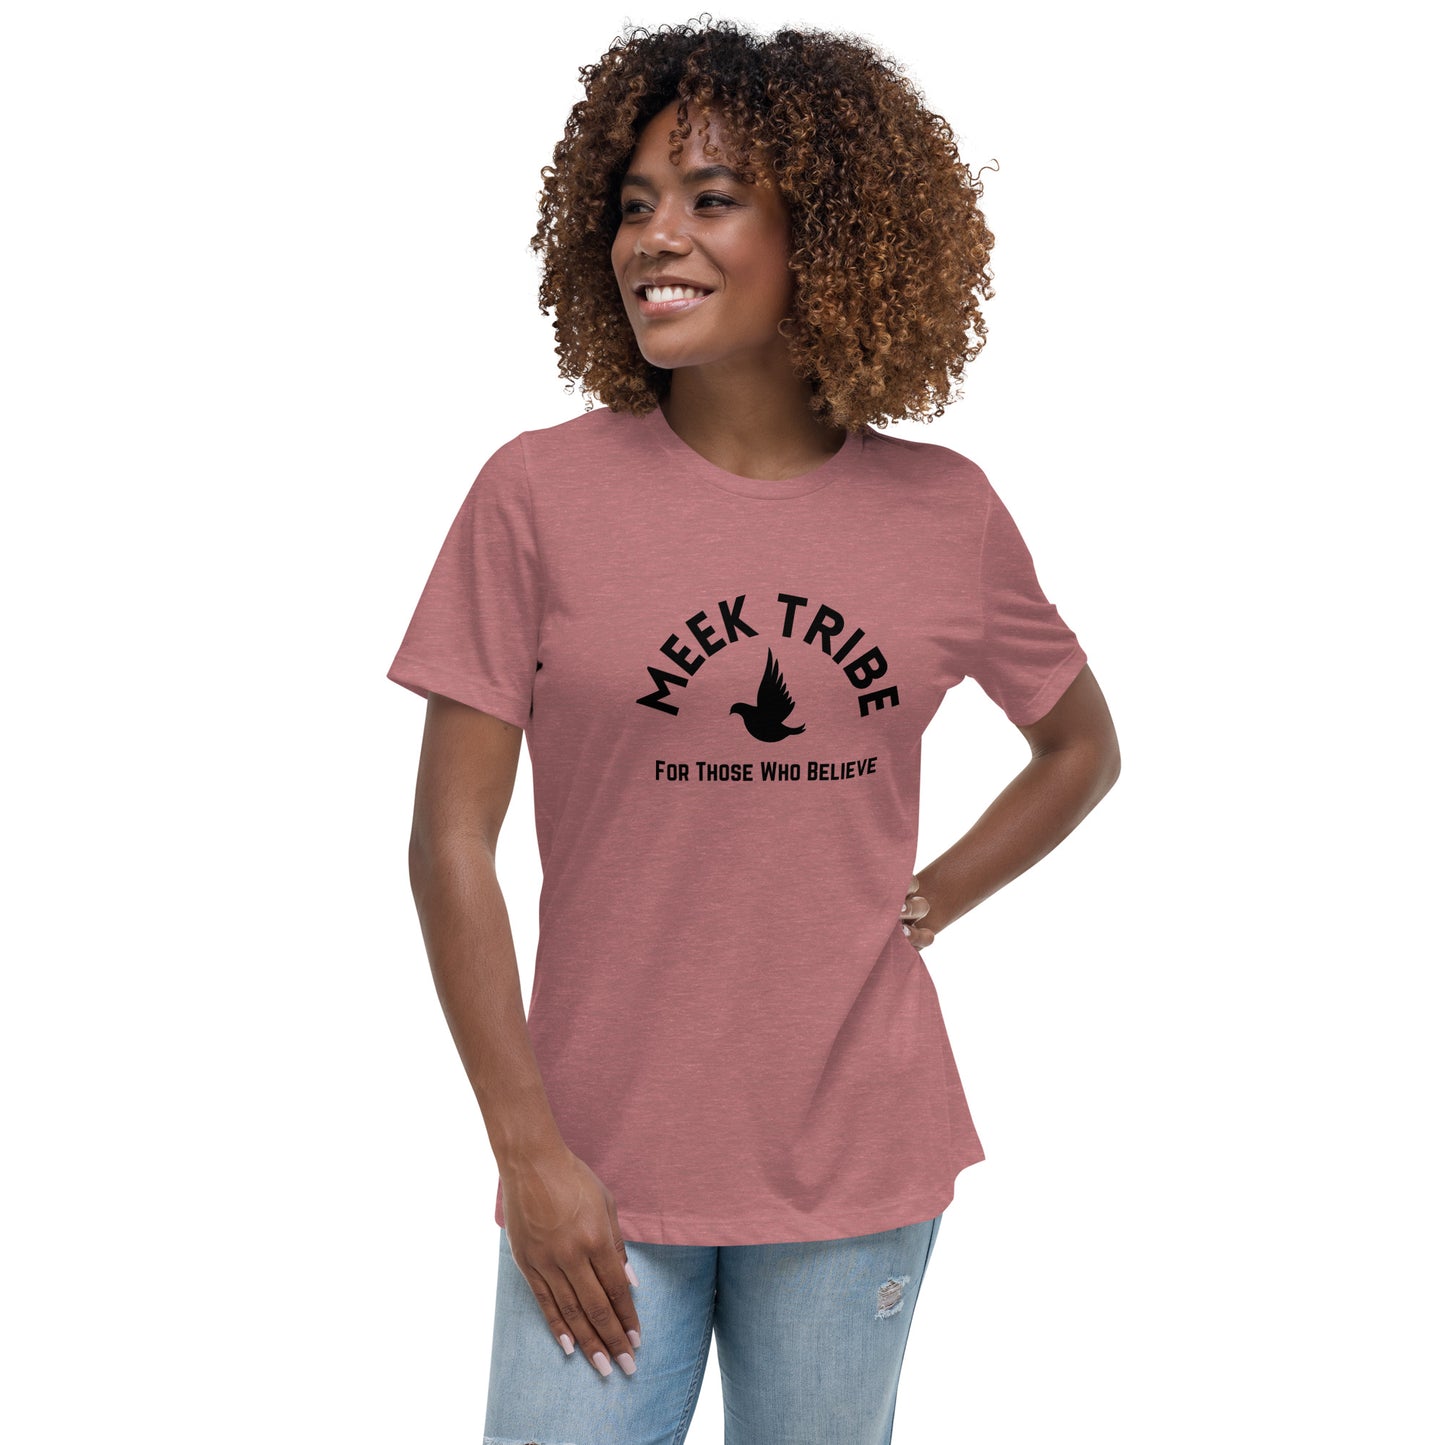 Meek Tribe "Classic 2" Women's Relaxed T-Shirt